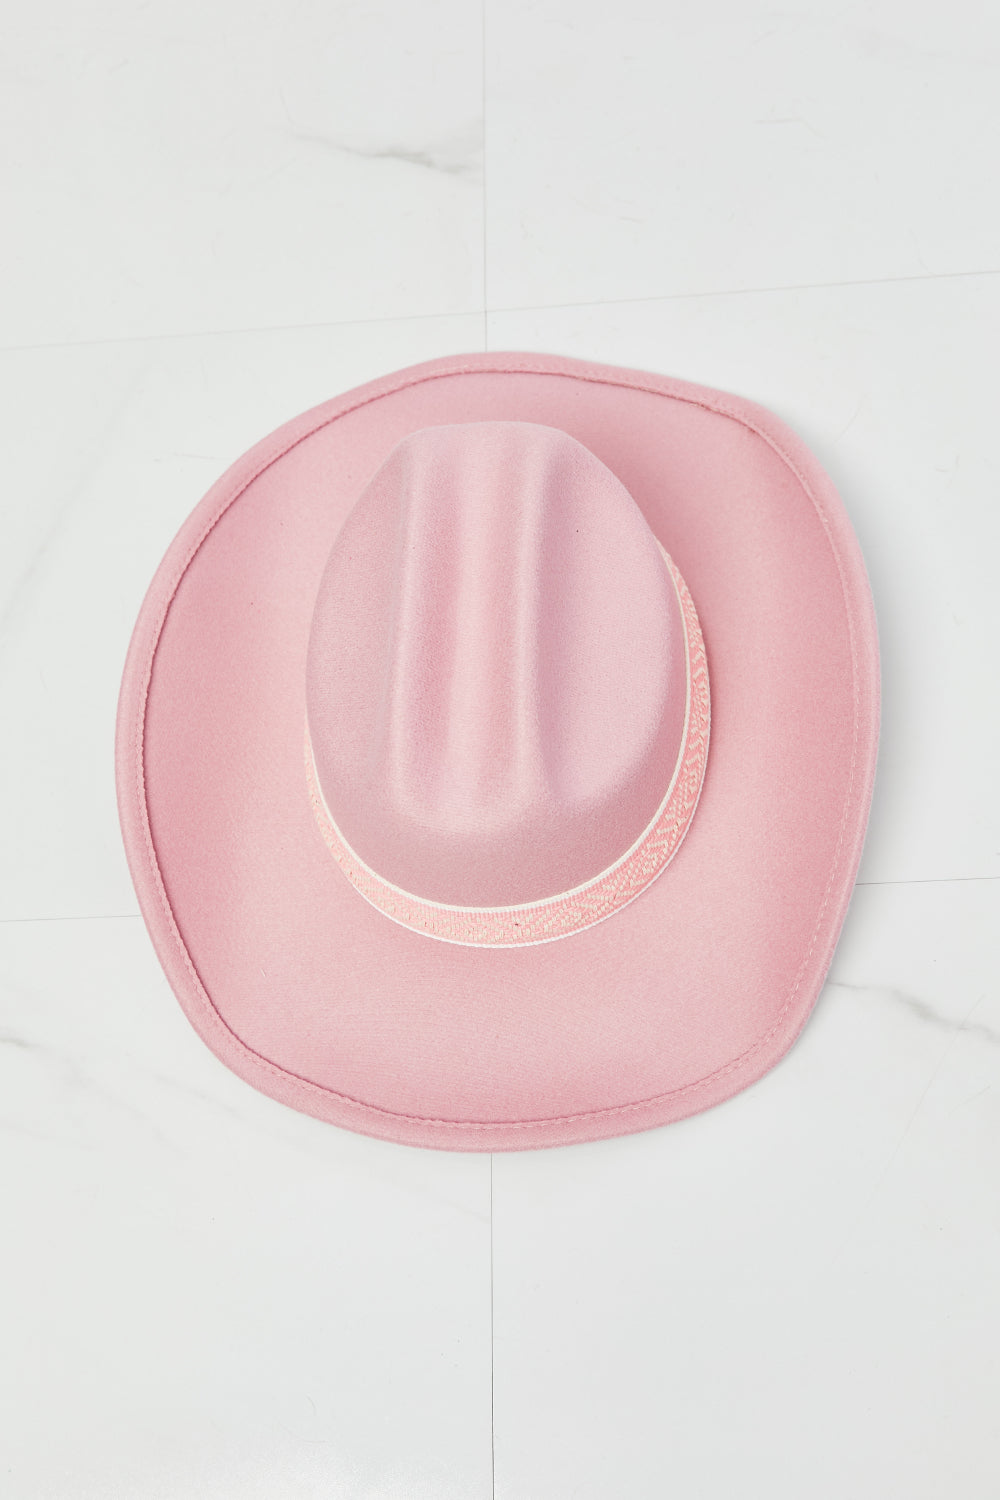 Fame Western Cutie Cowboy Hat in Pink  | KIKI COUTURE